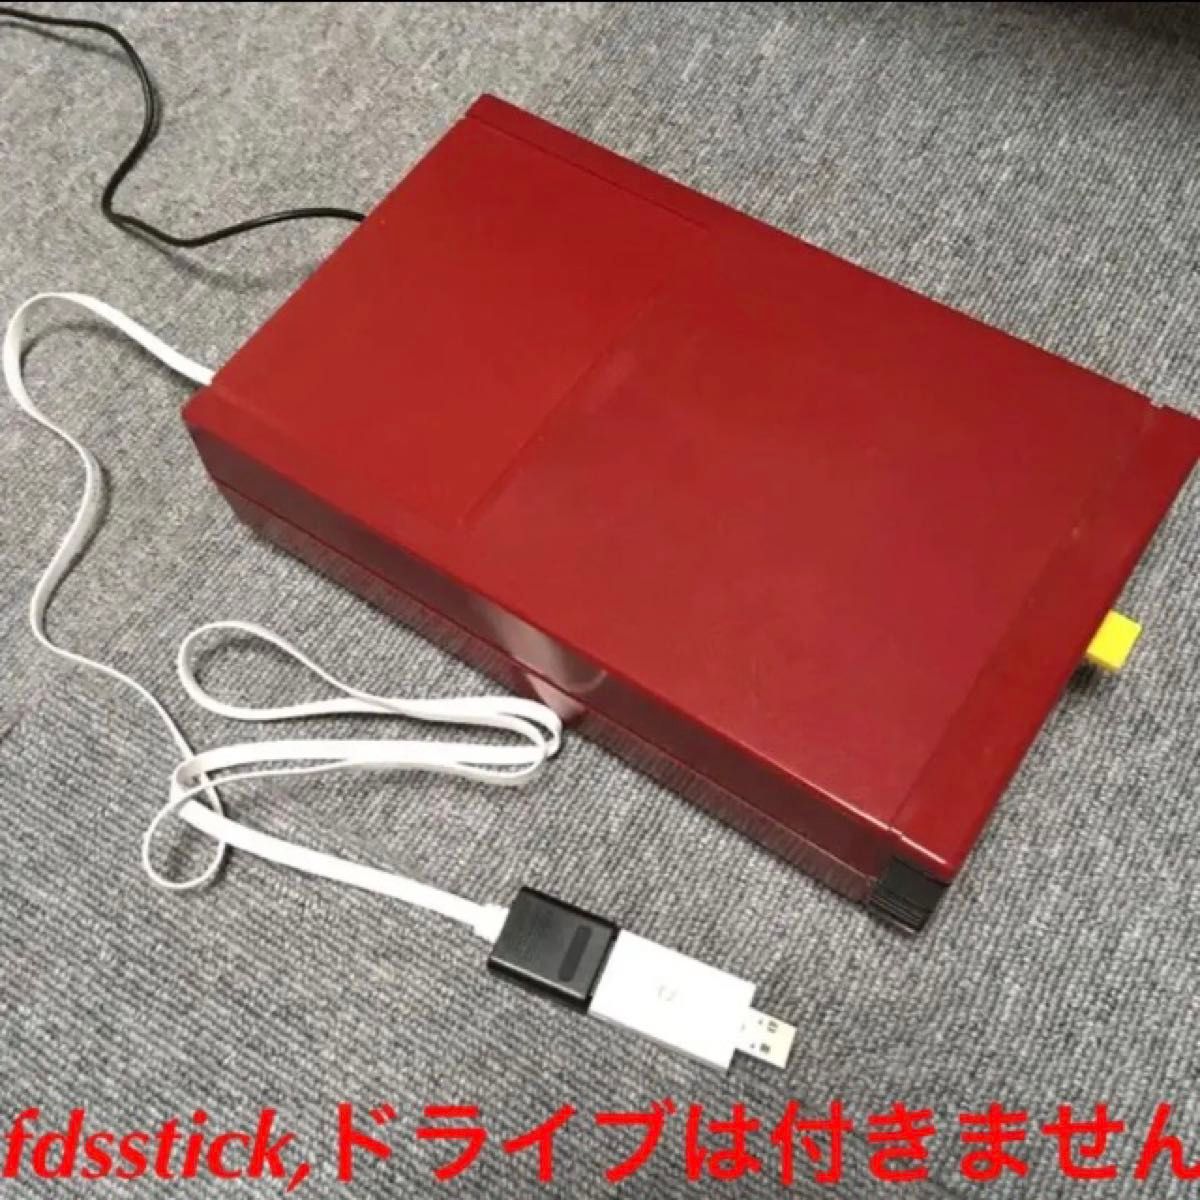 fdsstick ケーブル 白 1.0m ファミコン ディスク システム 無加工 disksystem ドライブ 接続 任天堂